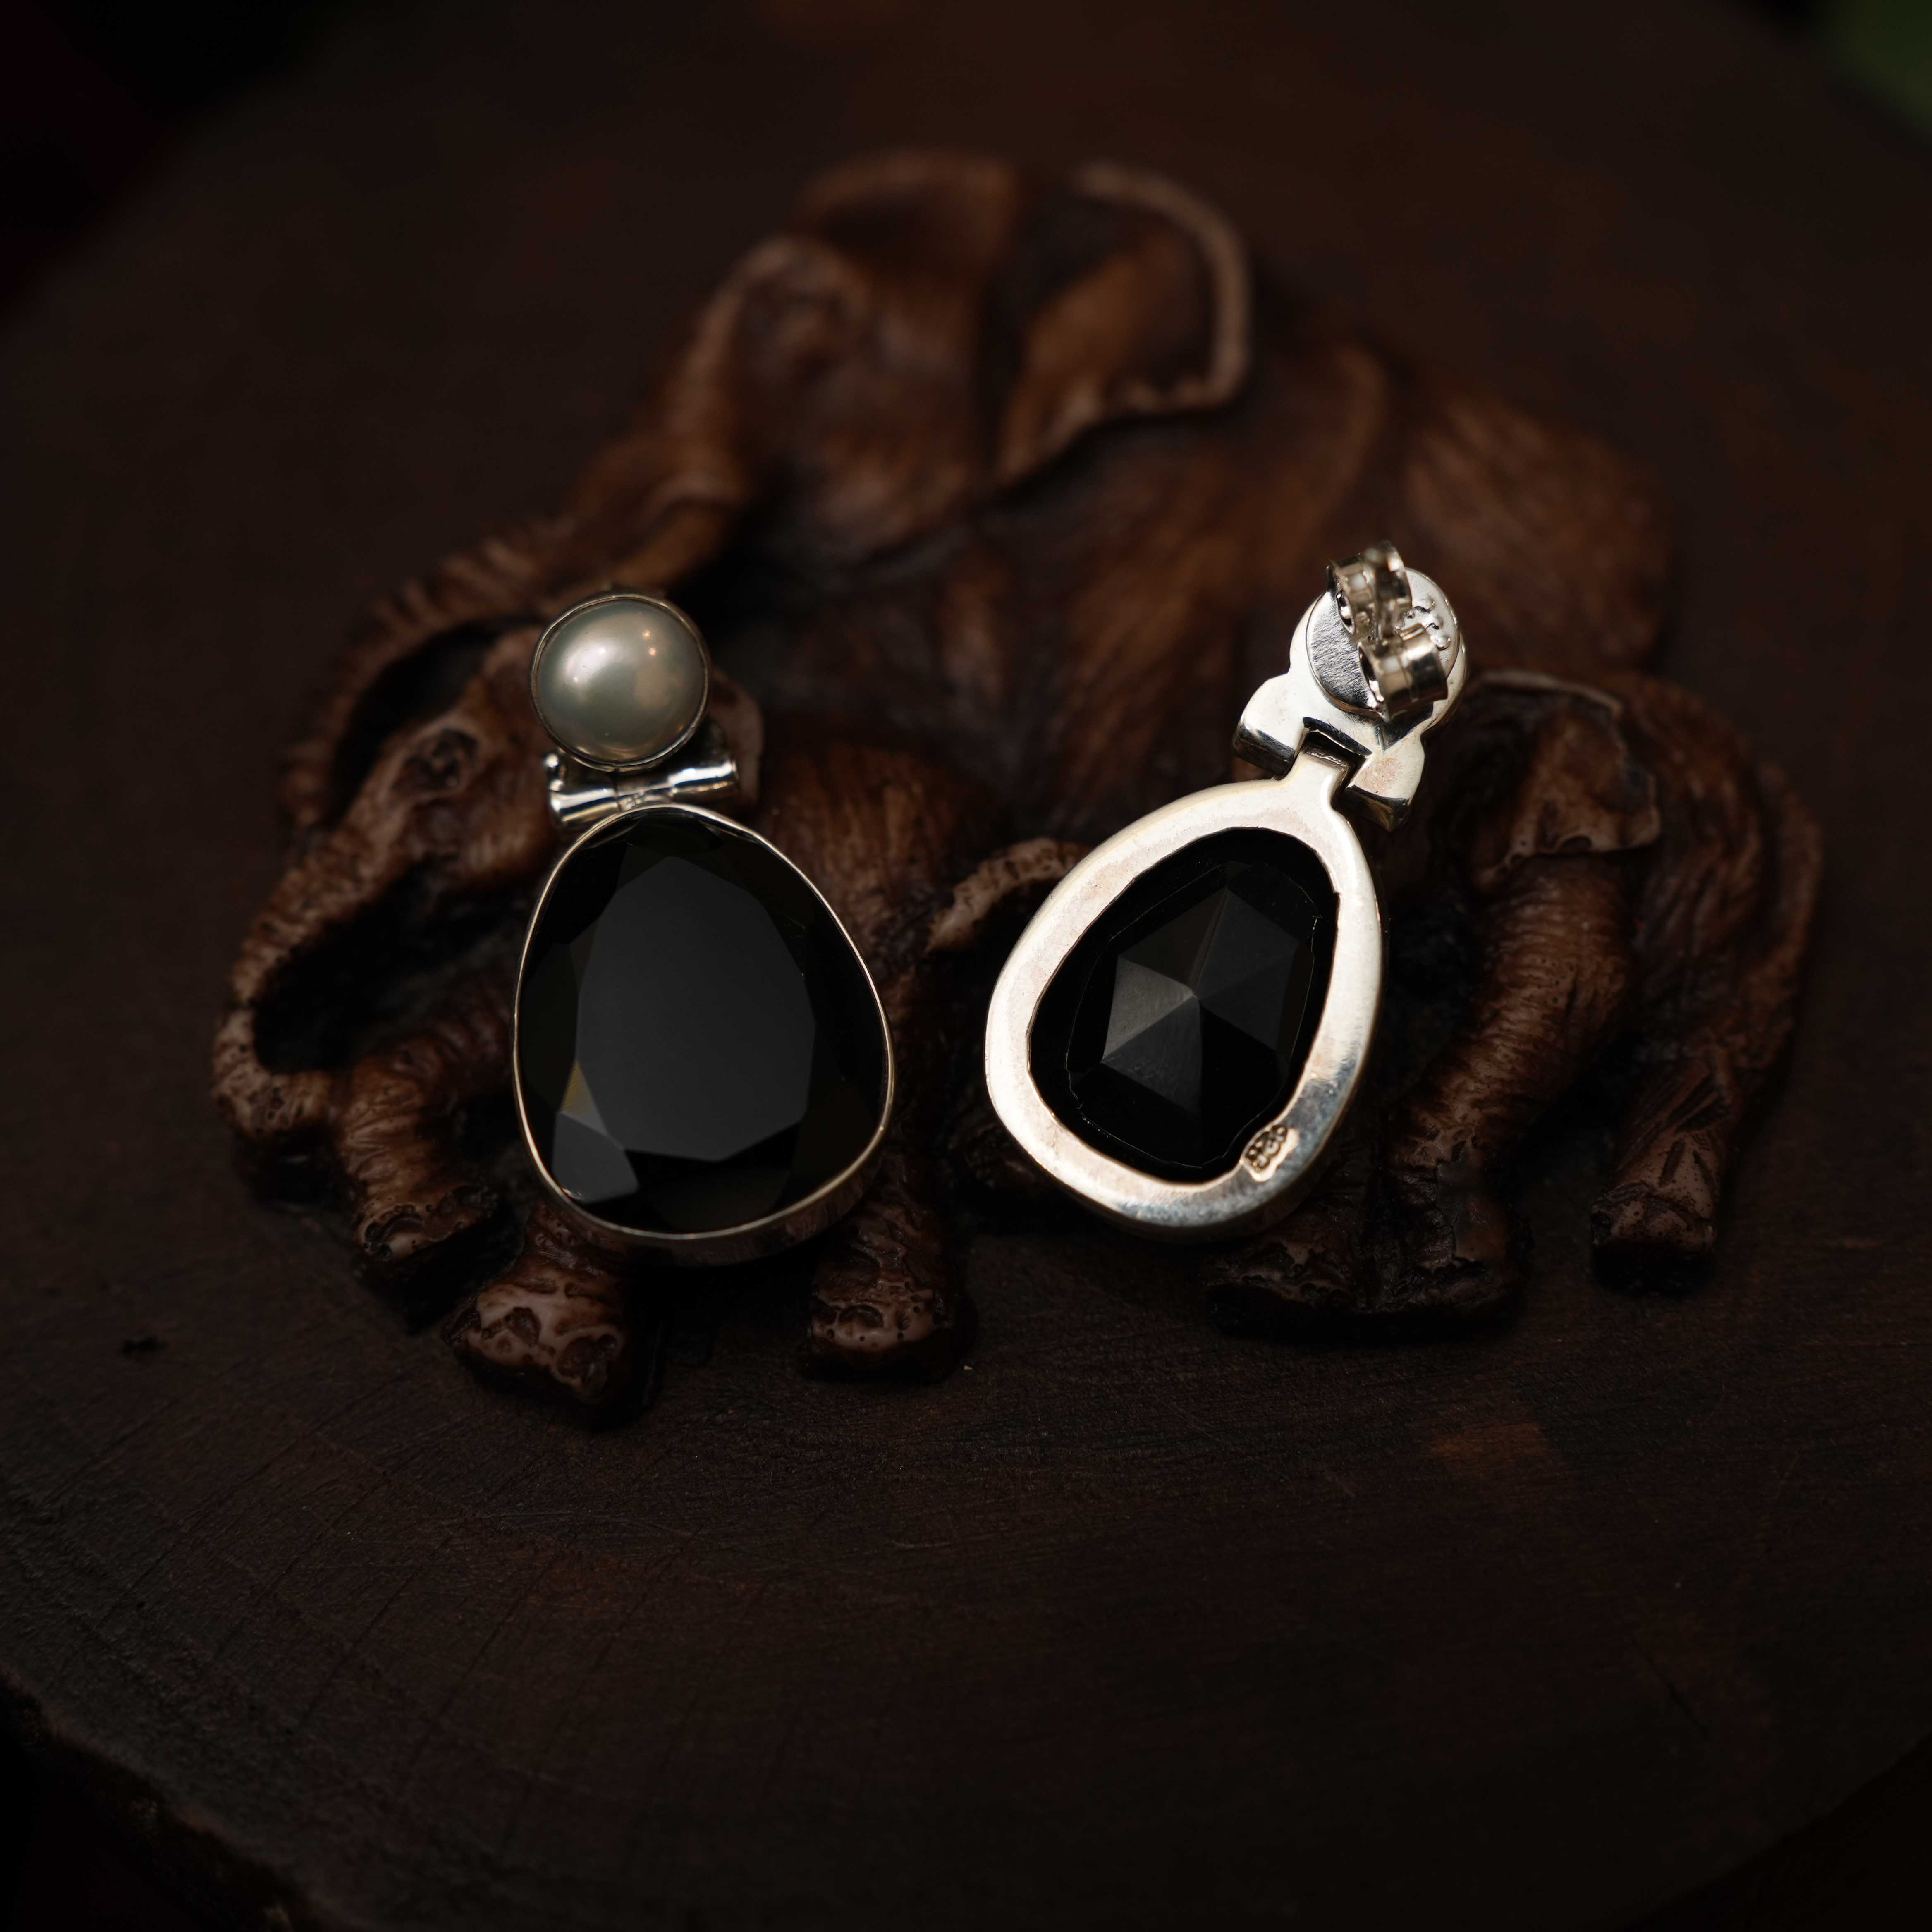 Rushmitha 925 Oxidized Silver Earrings - Black